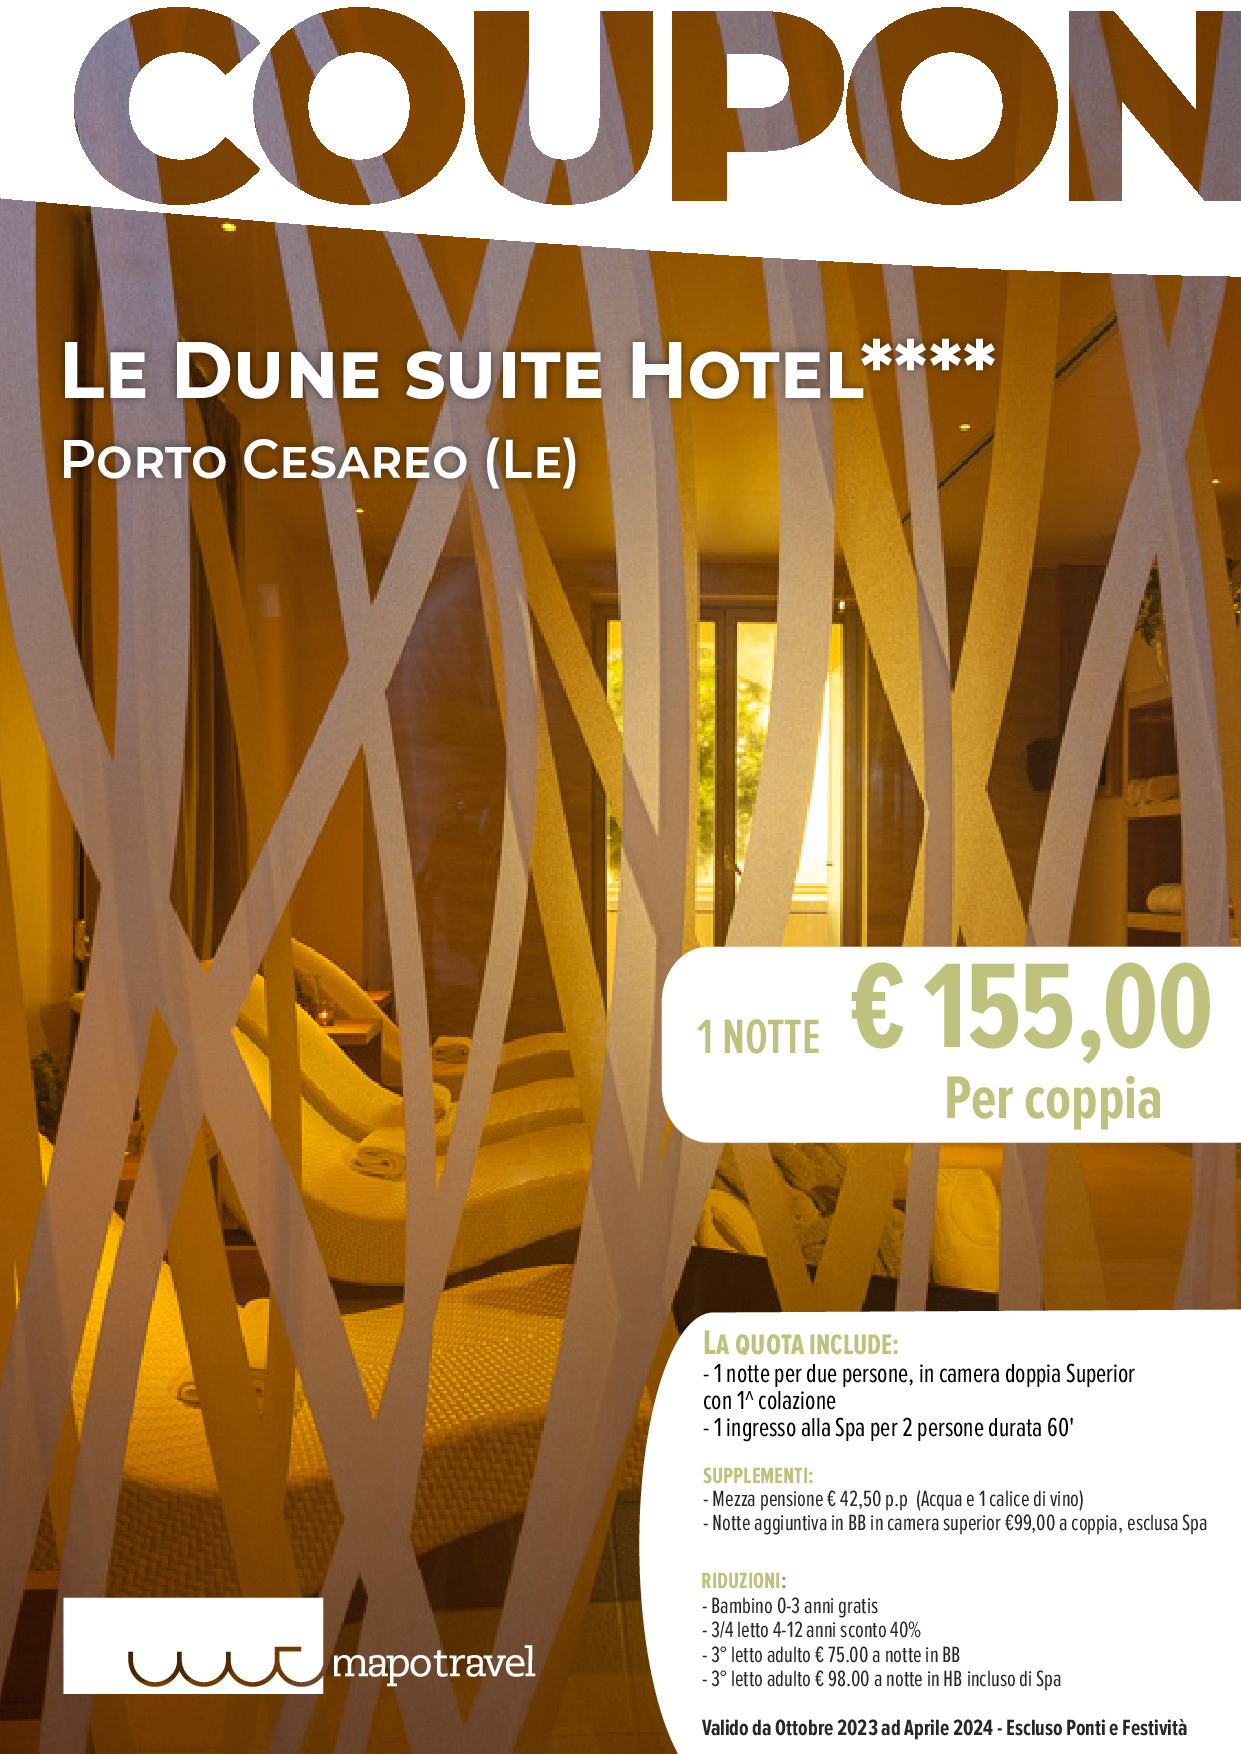 Le Dune Suite Hotel - Coupon